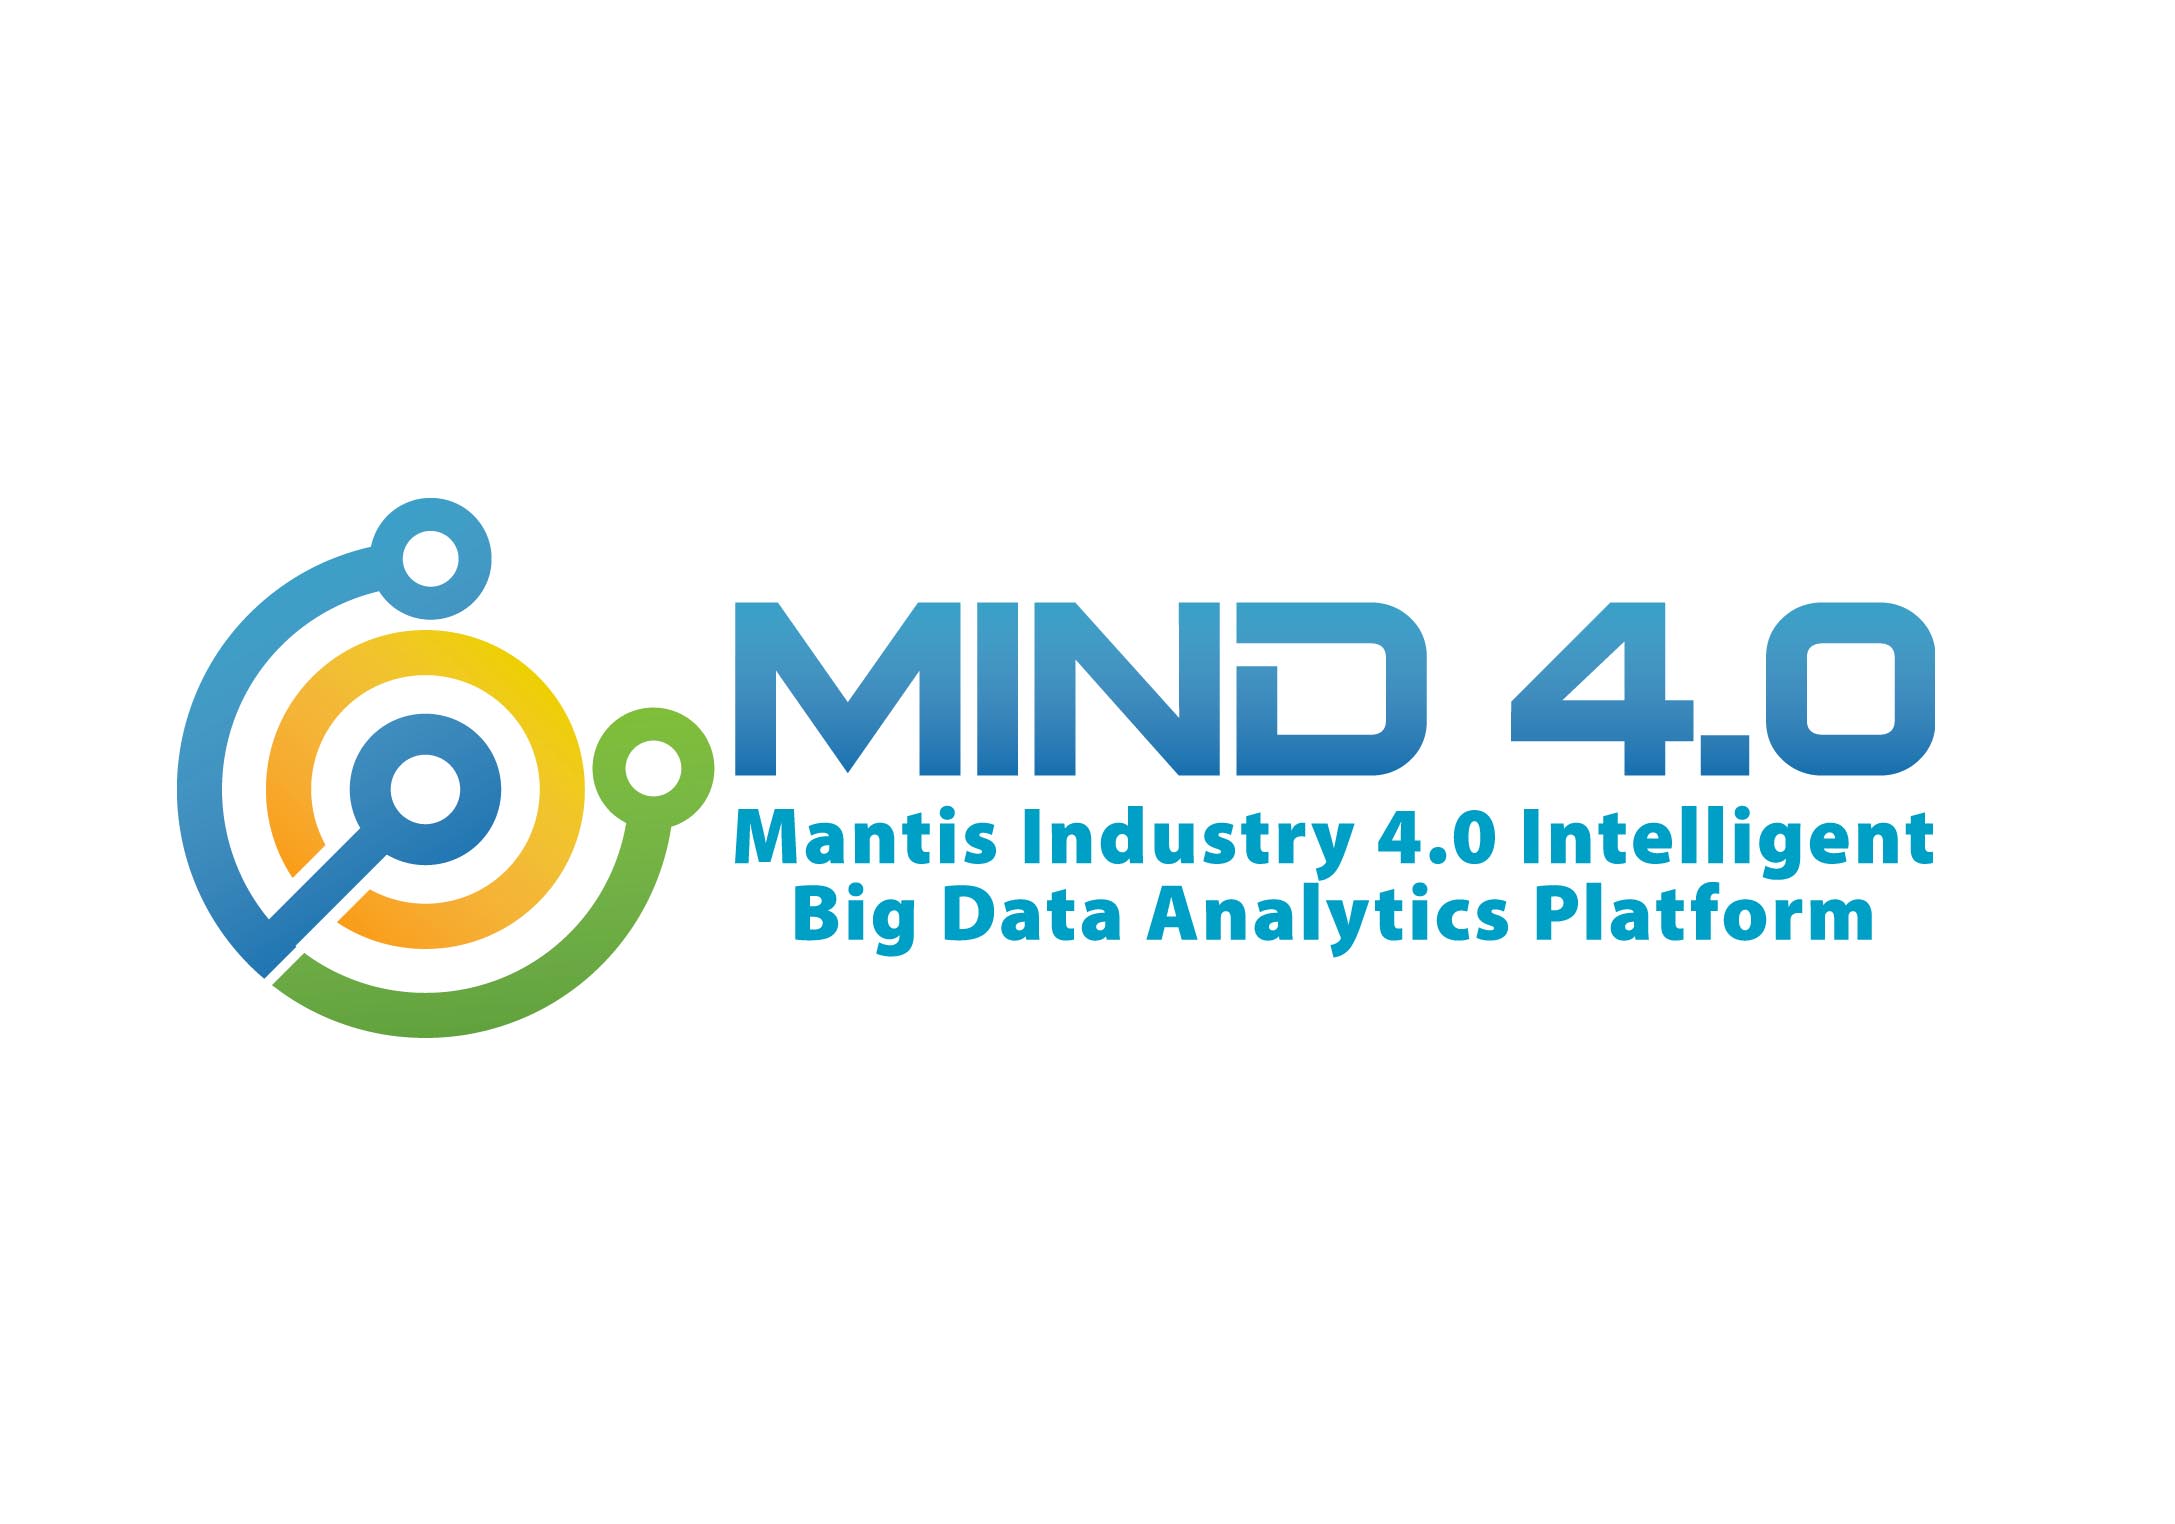 MIND 4.0 Mantis Big Data Analysis Platform